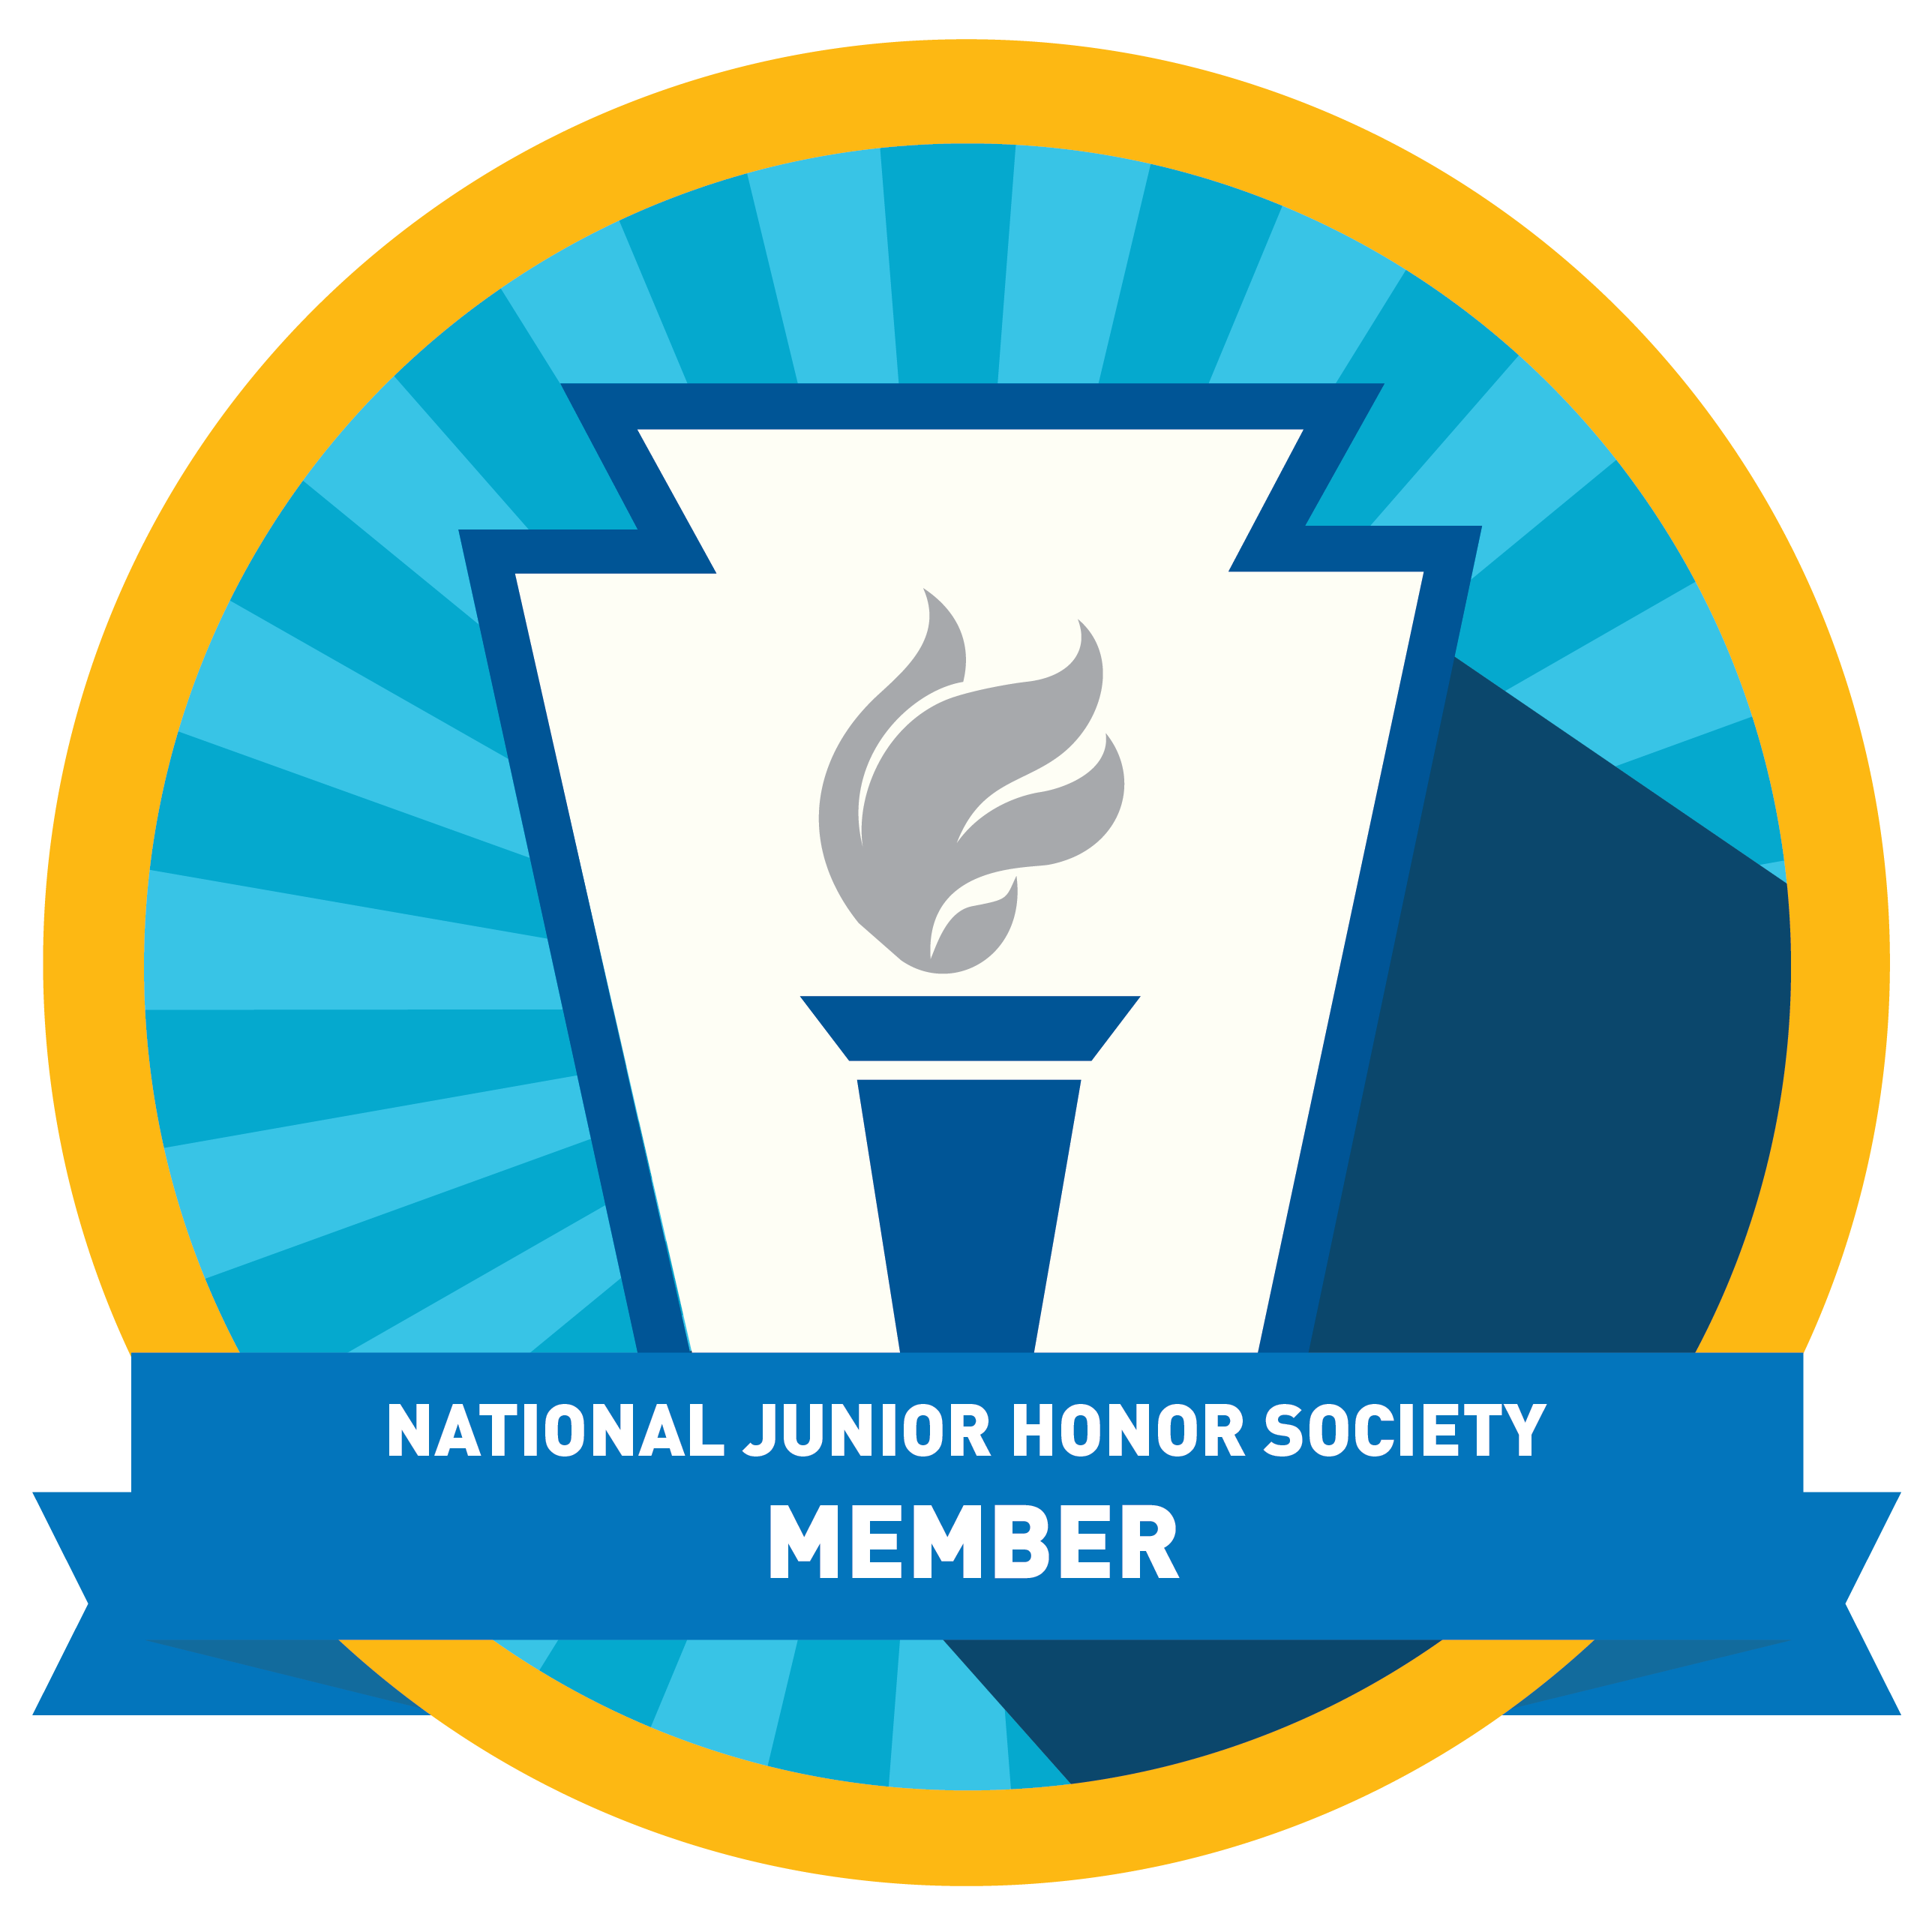 national junior honor society